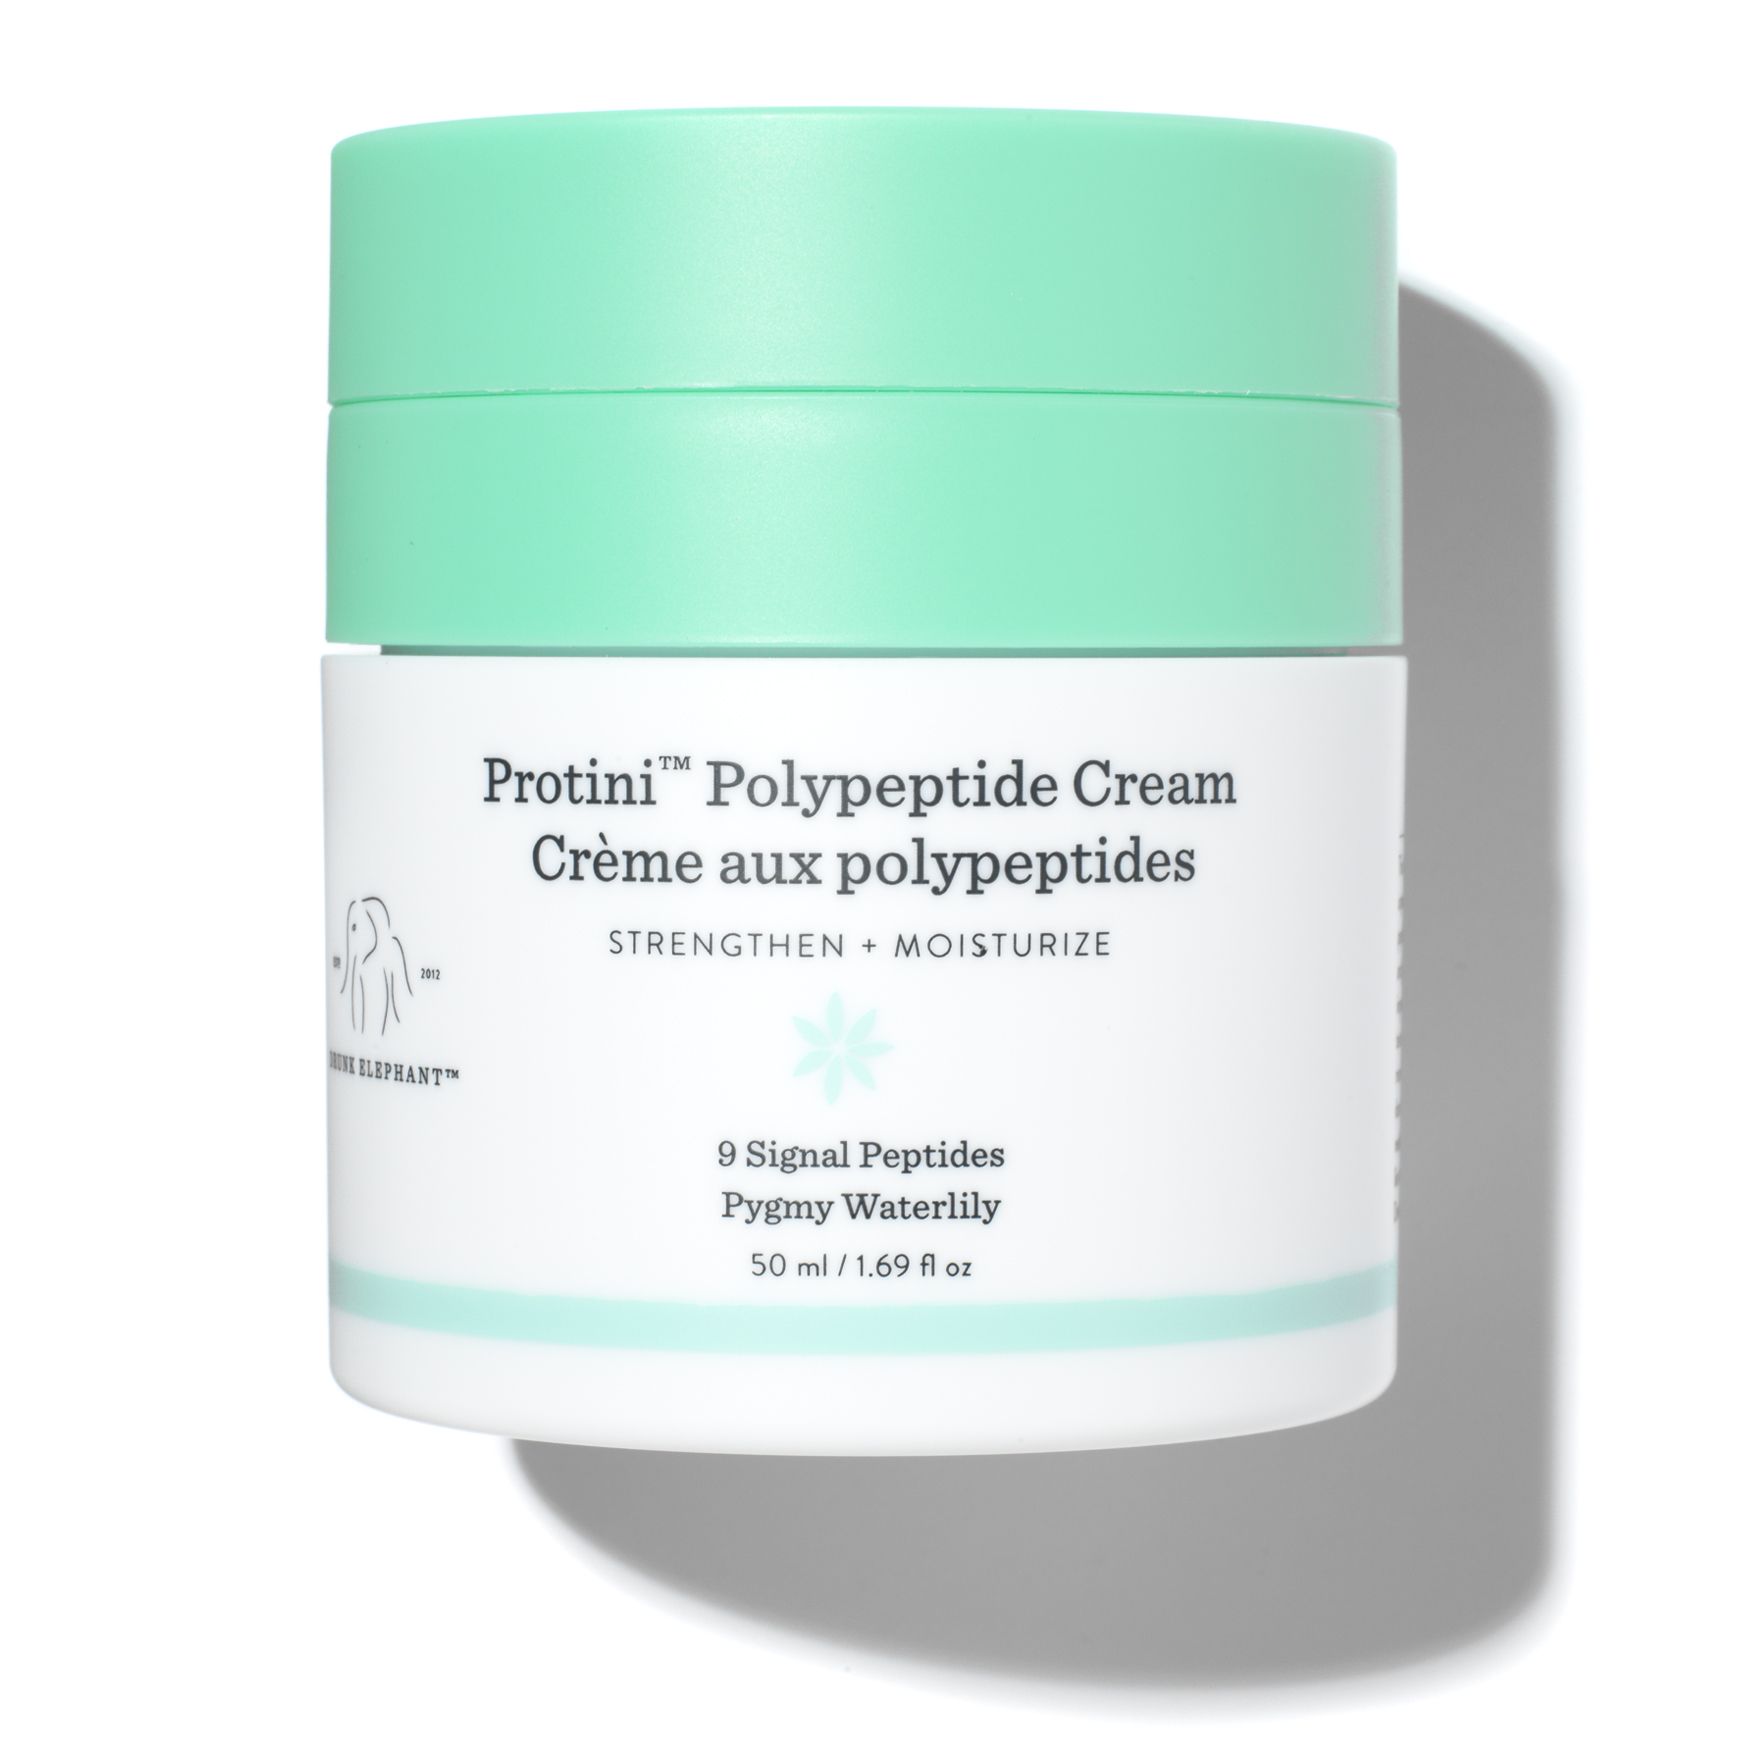 Protini Polypeptide Cream | Space NK - UK